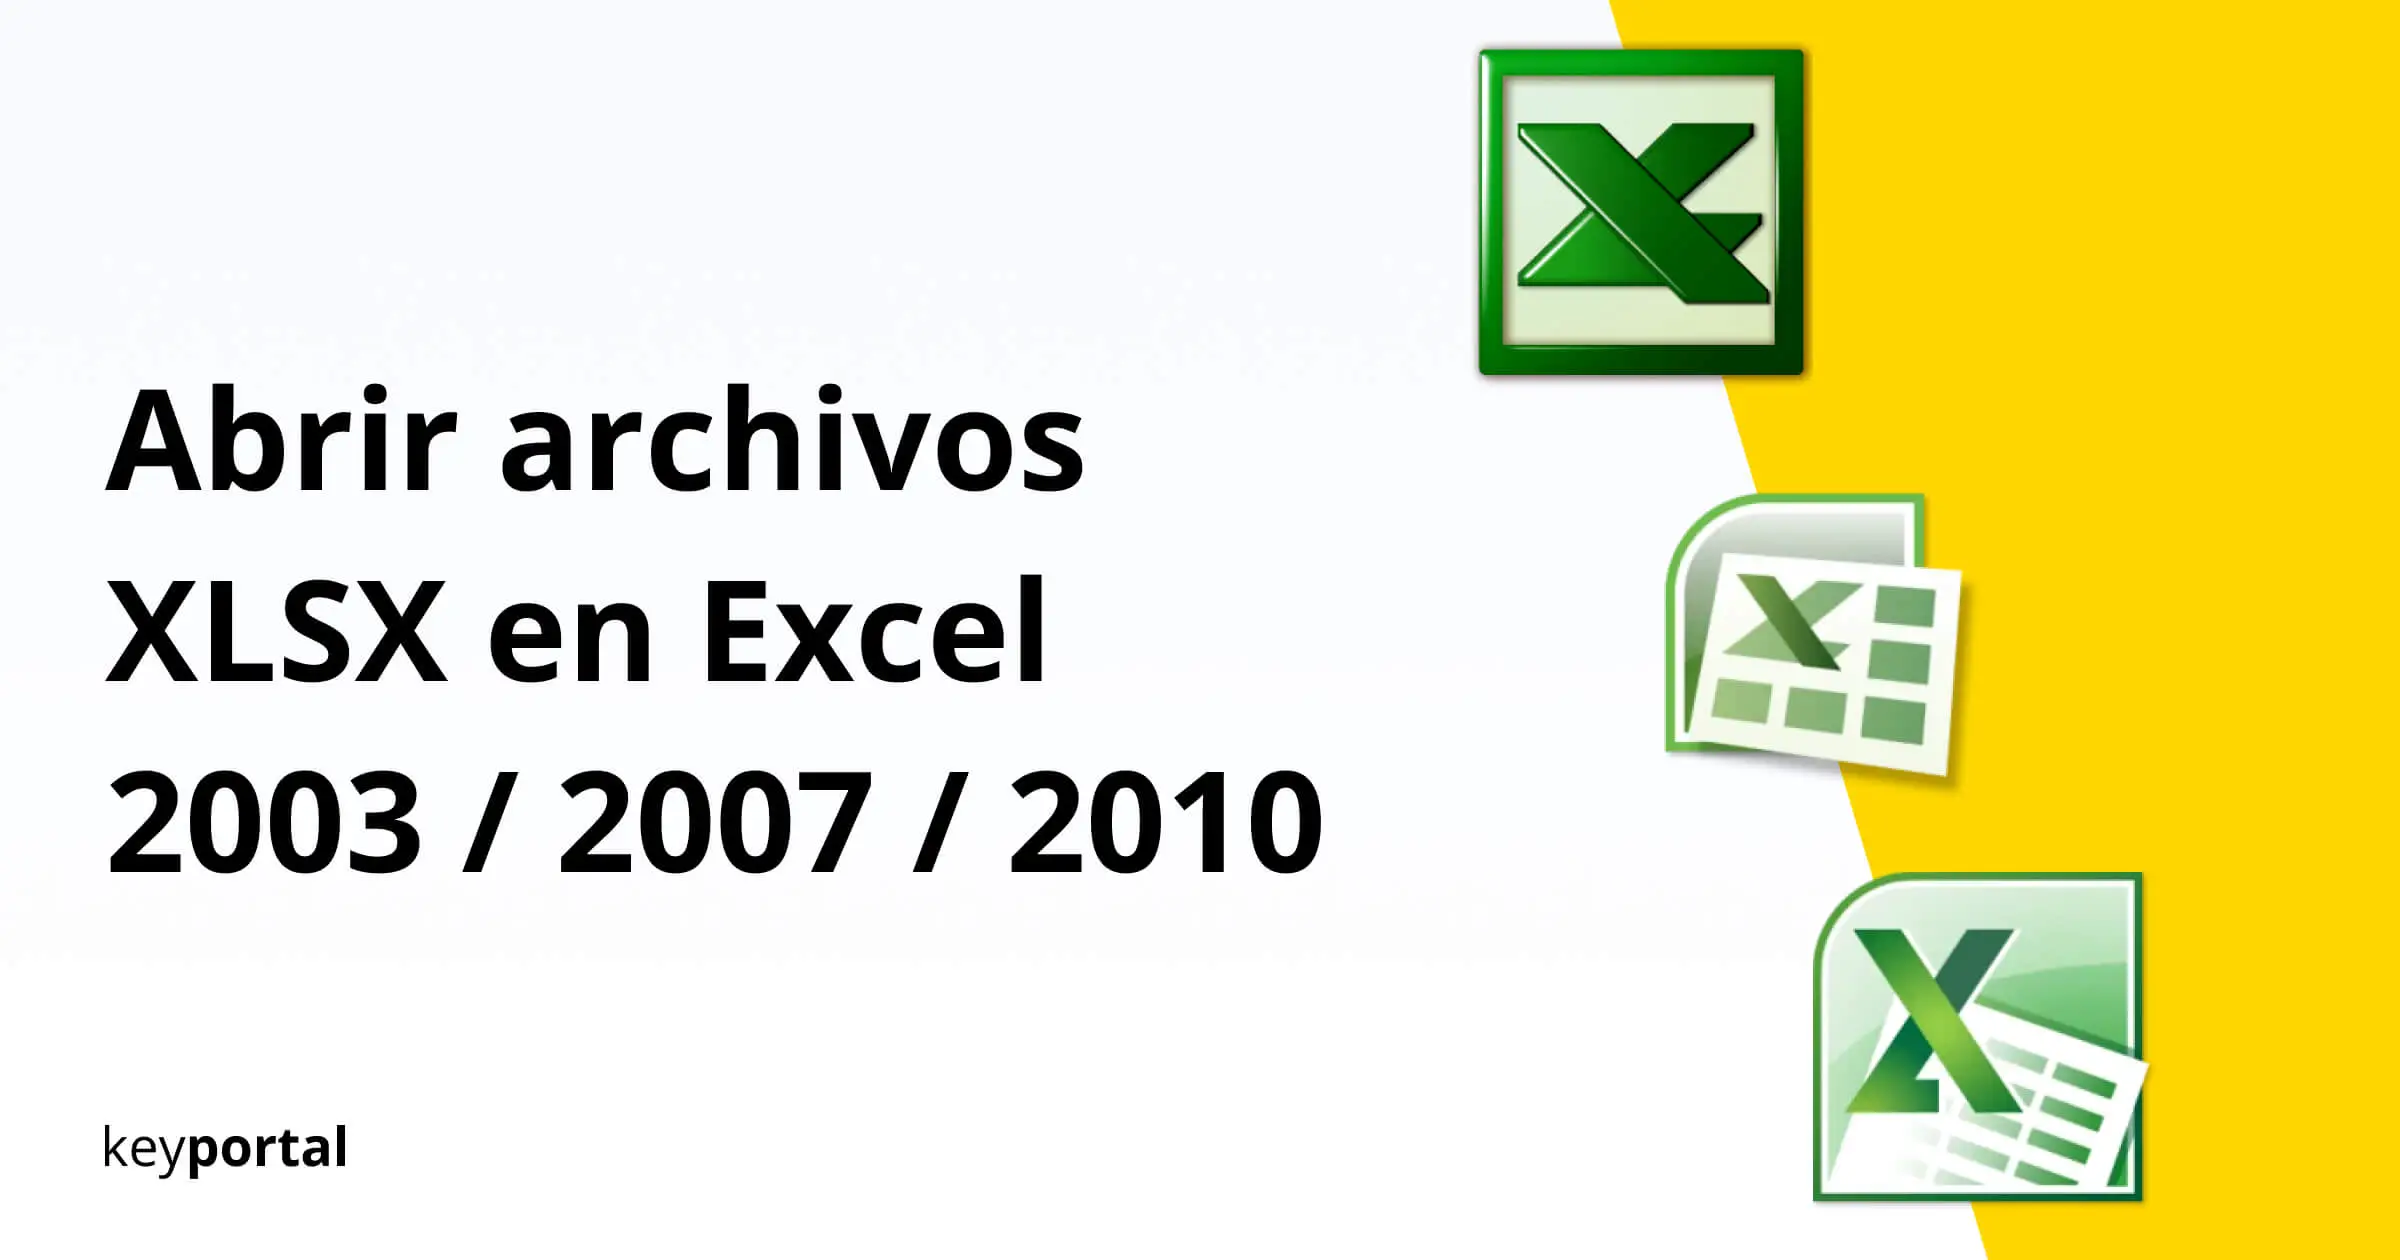 Total 43+ imagen archivos xlsx en office 2007